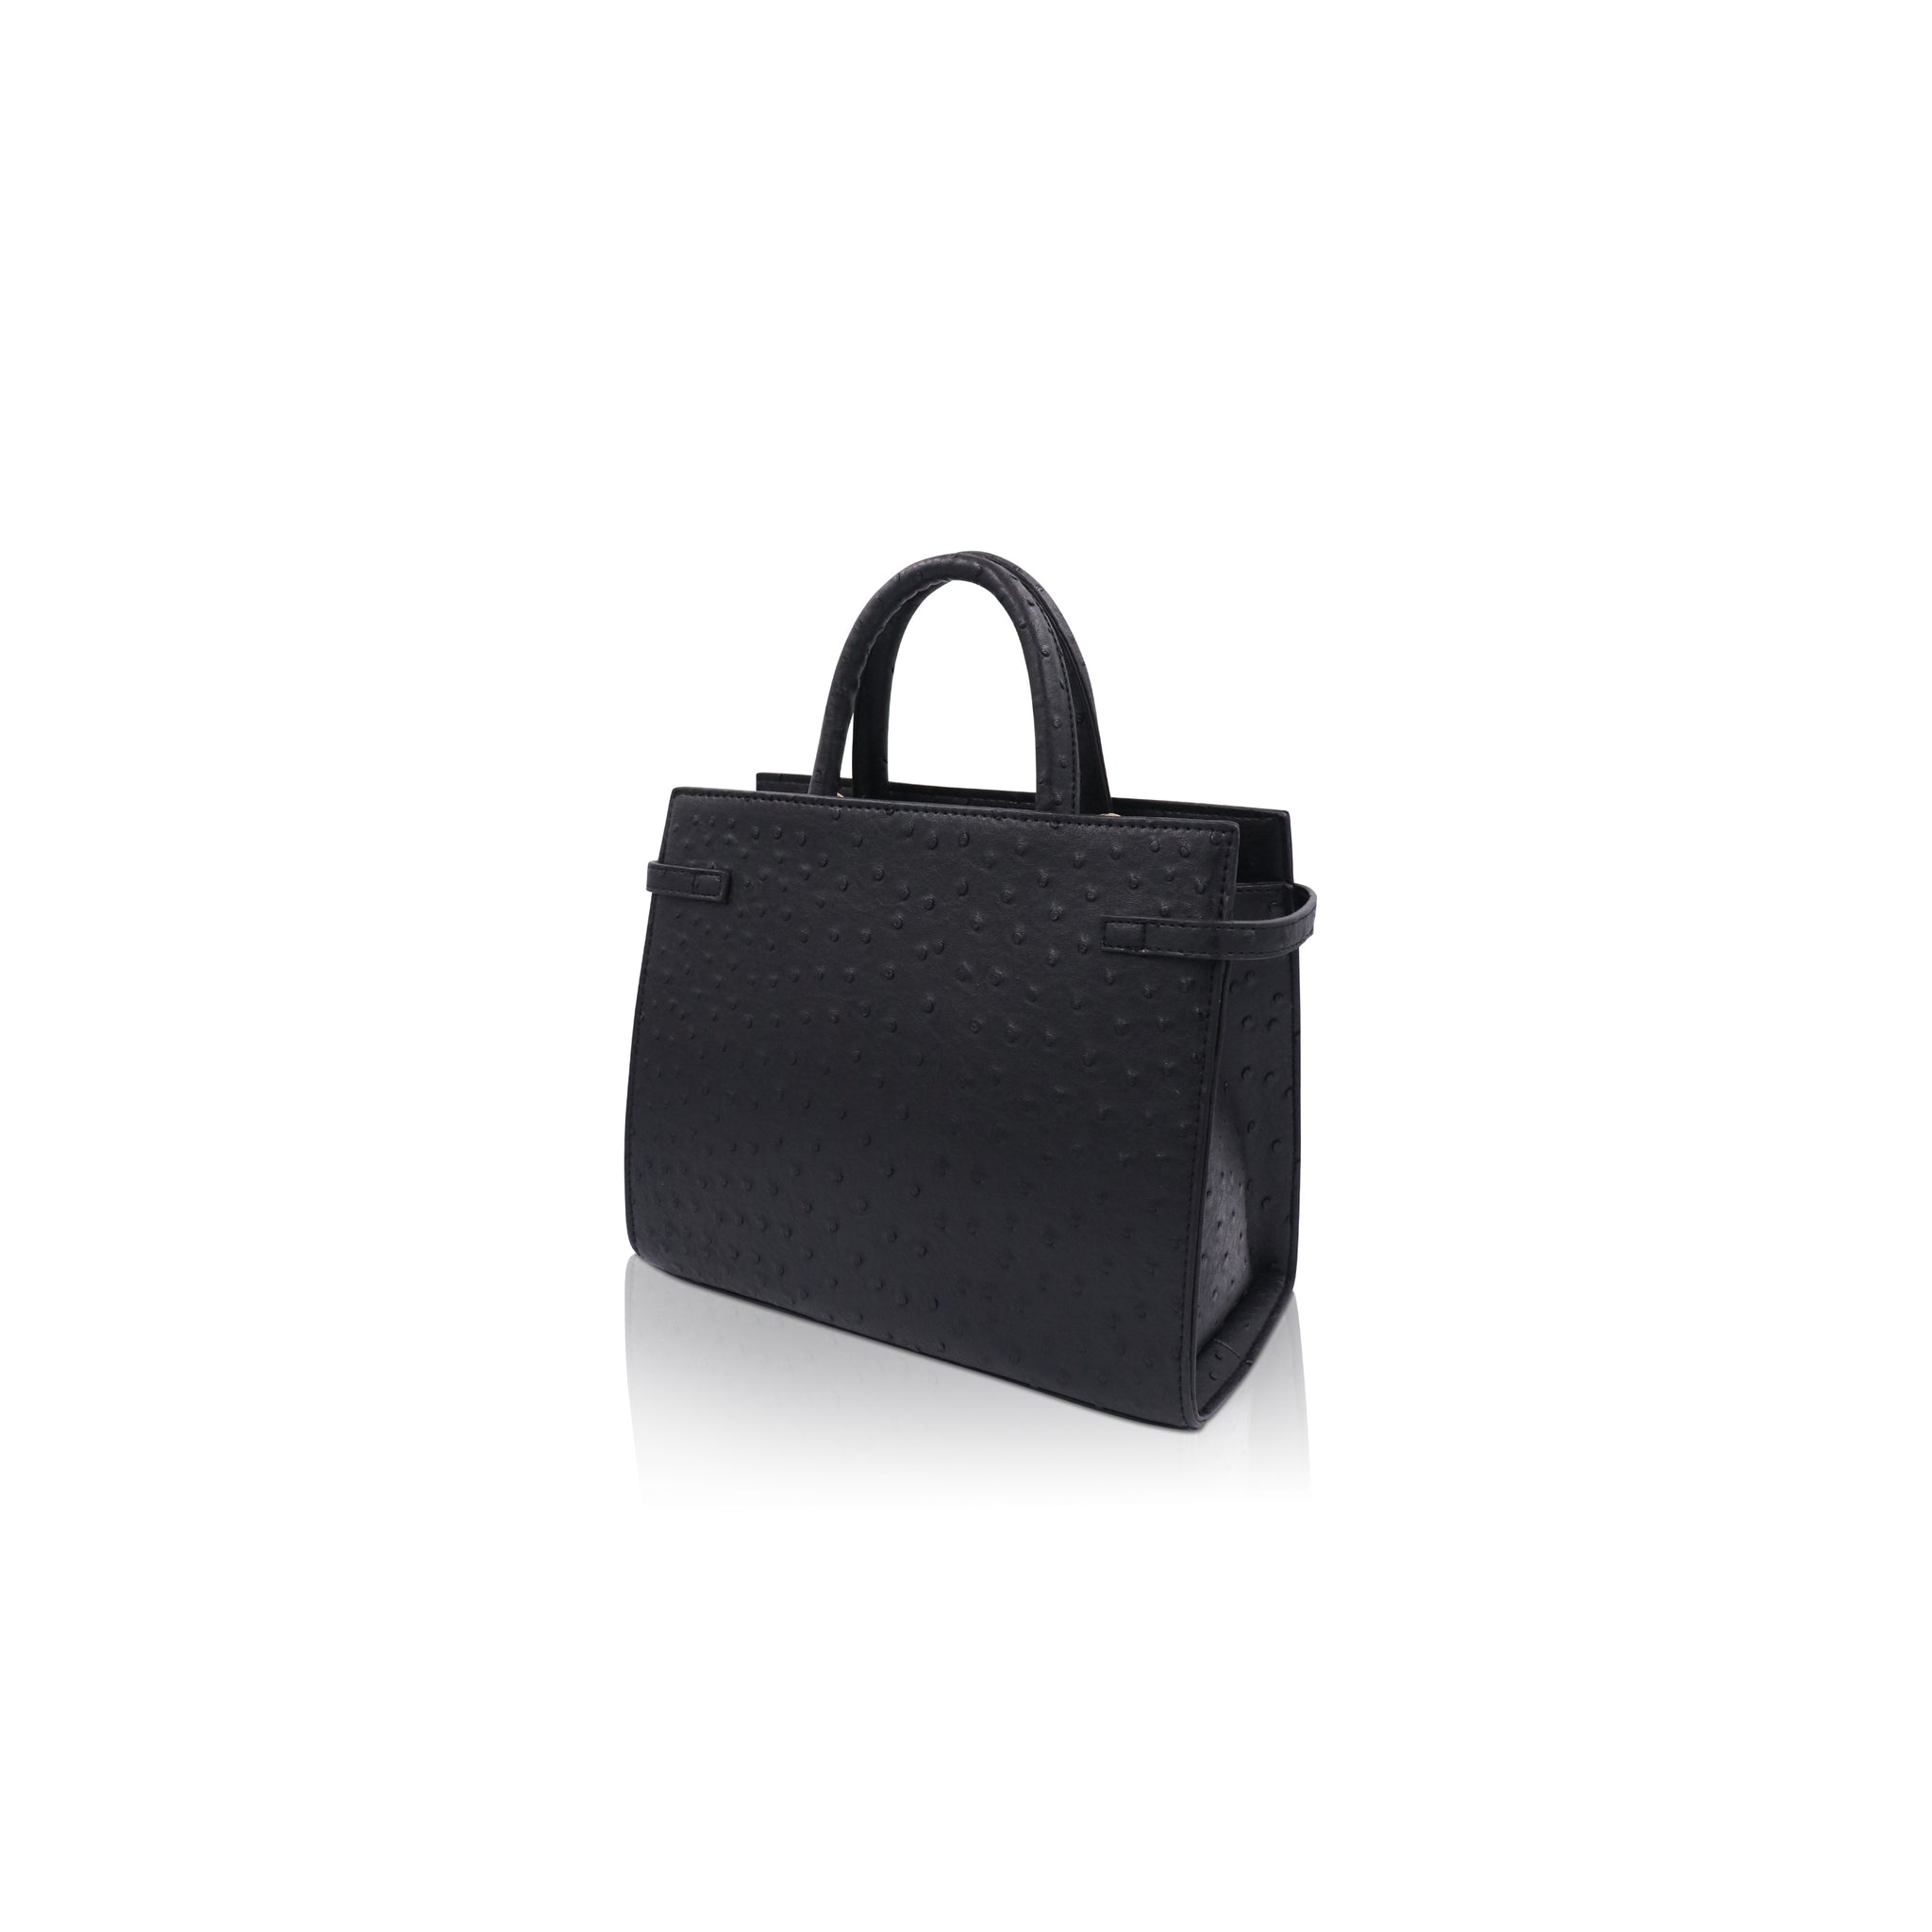 Black Ostrich Bag Leather Medium Bag Hand Bag Handmade 